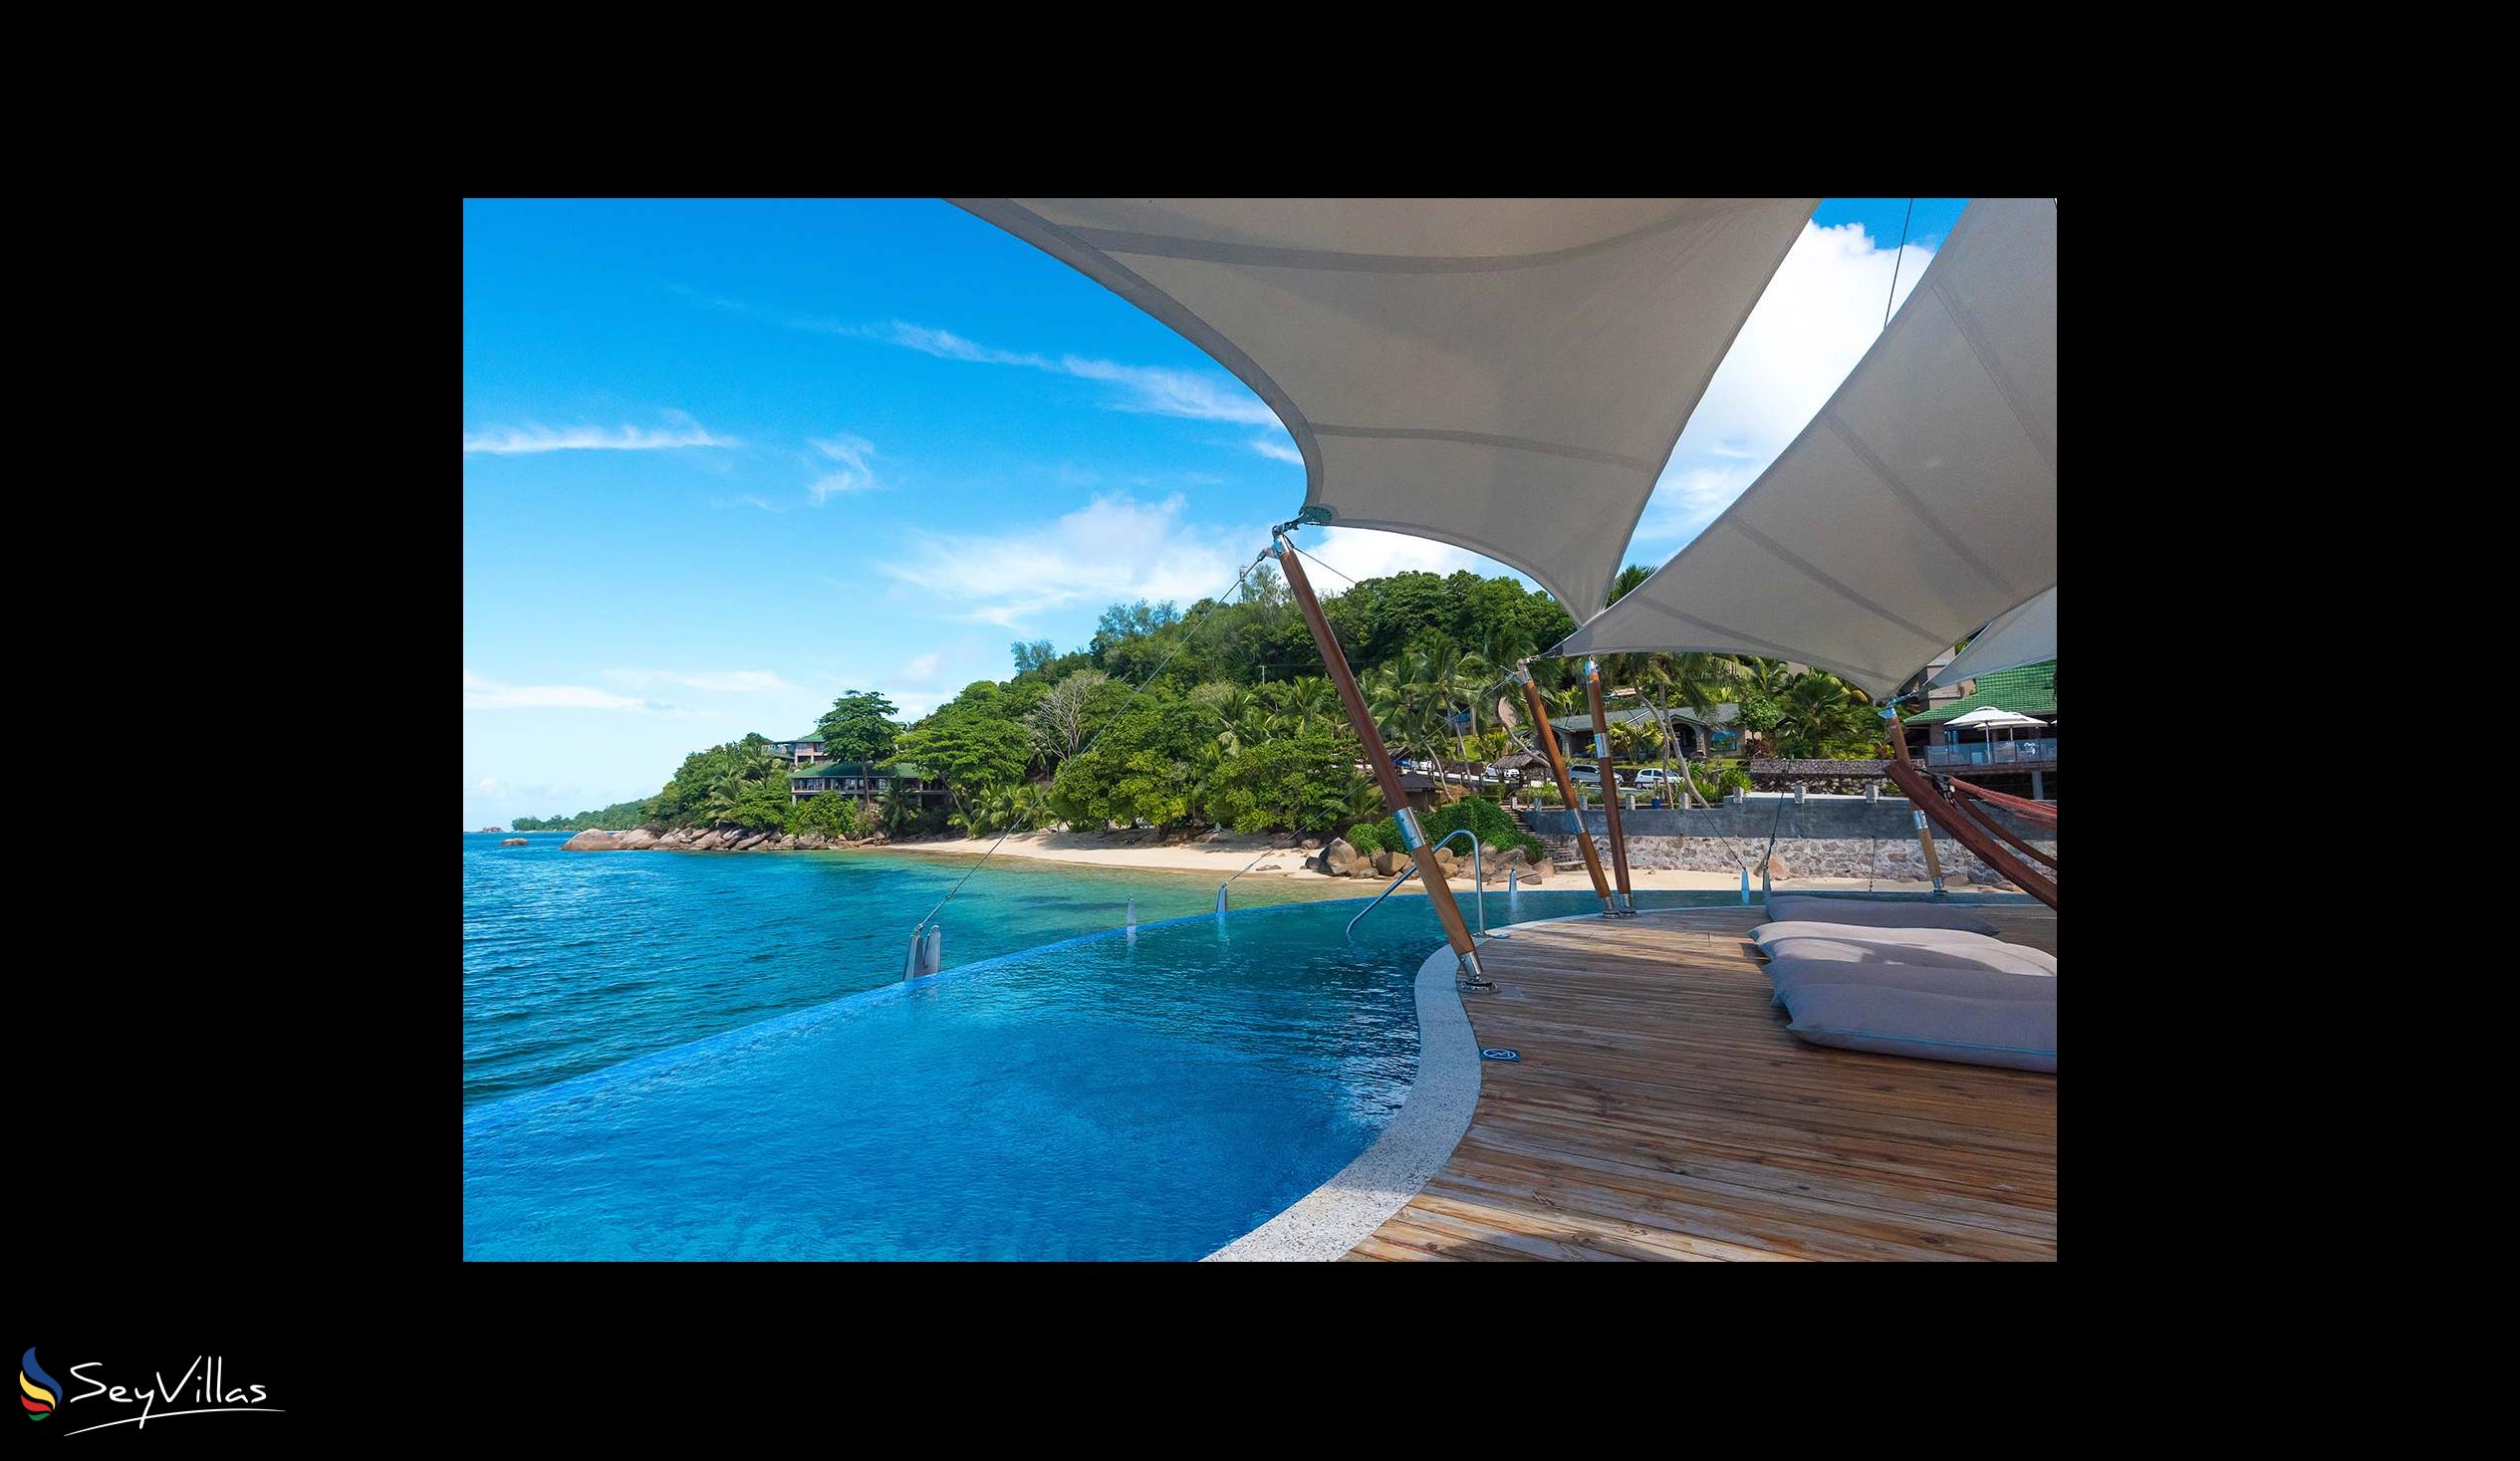 Photo 8: Coco de Mer & Black Parrot Suites - Outdoor area - Praslin (Seychelles)